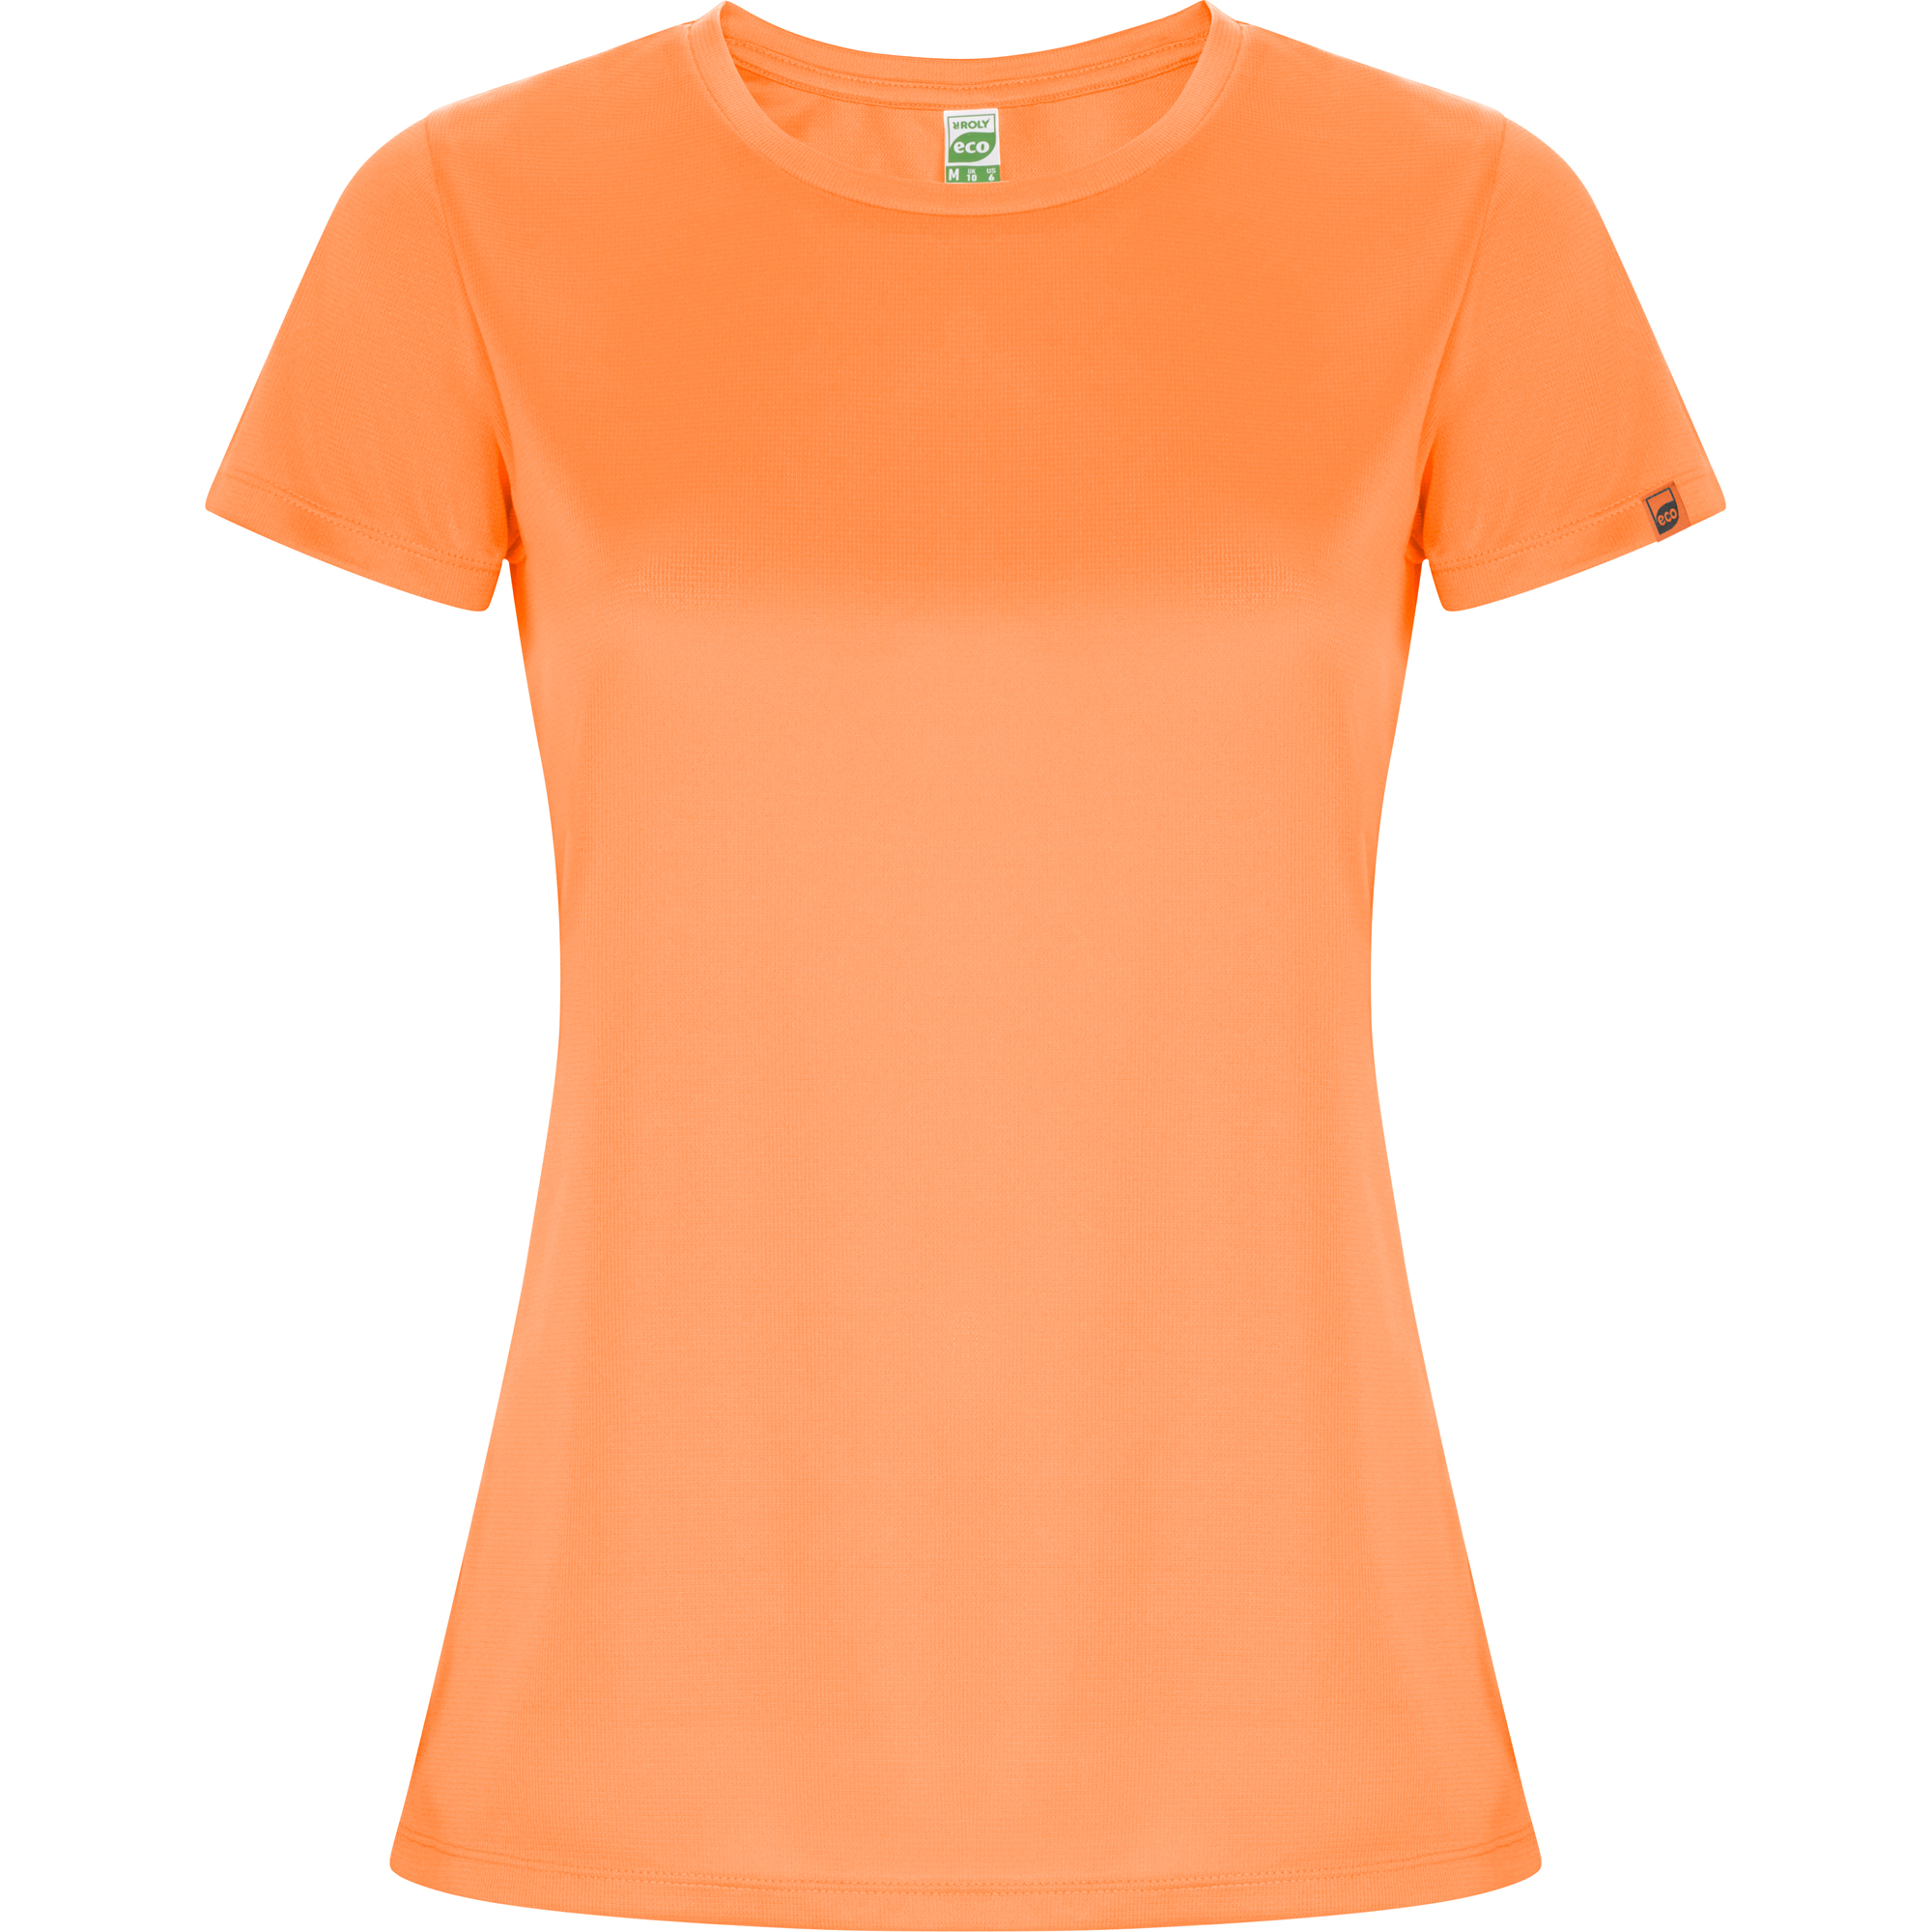 r0428-roly-imola-woman-t-shirt-tecnica-arancione-fluo.jpg